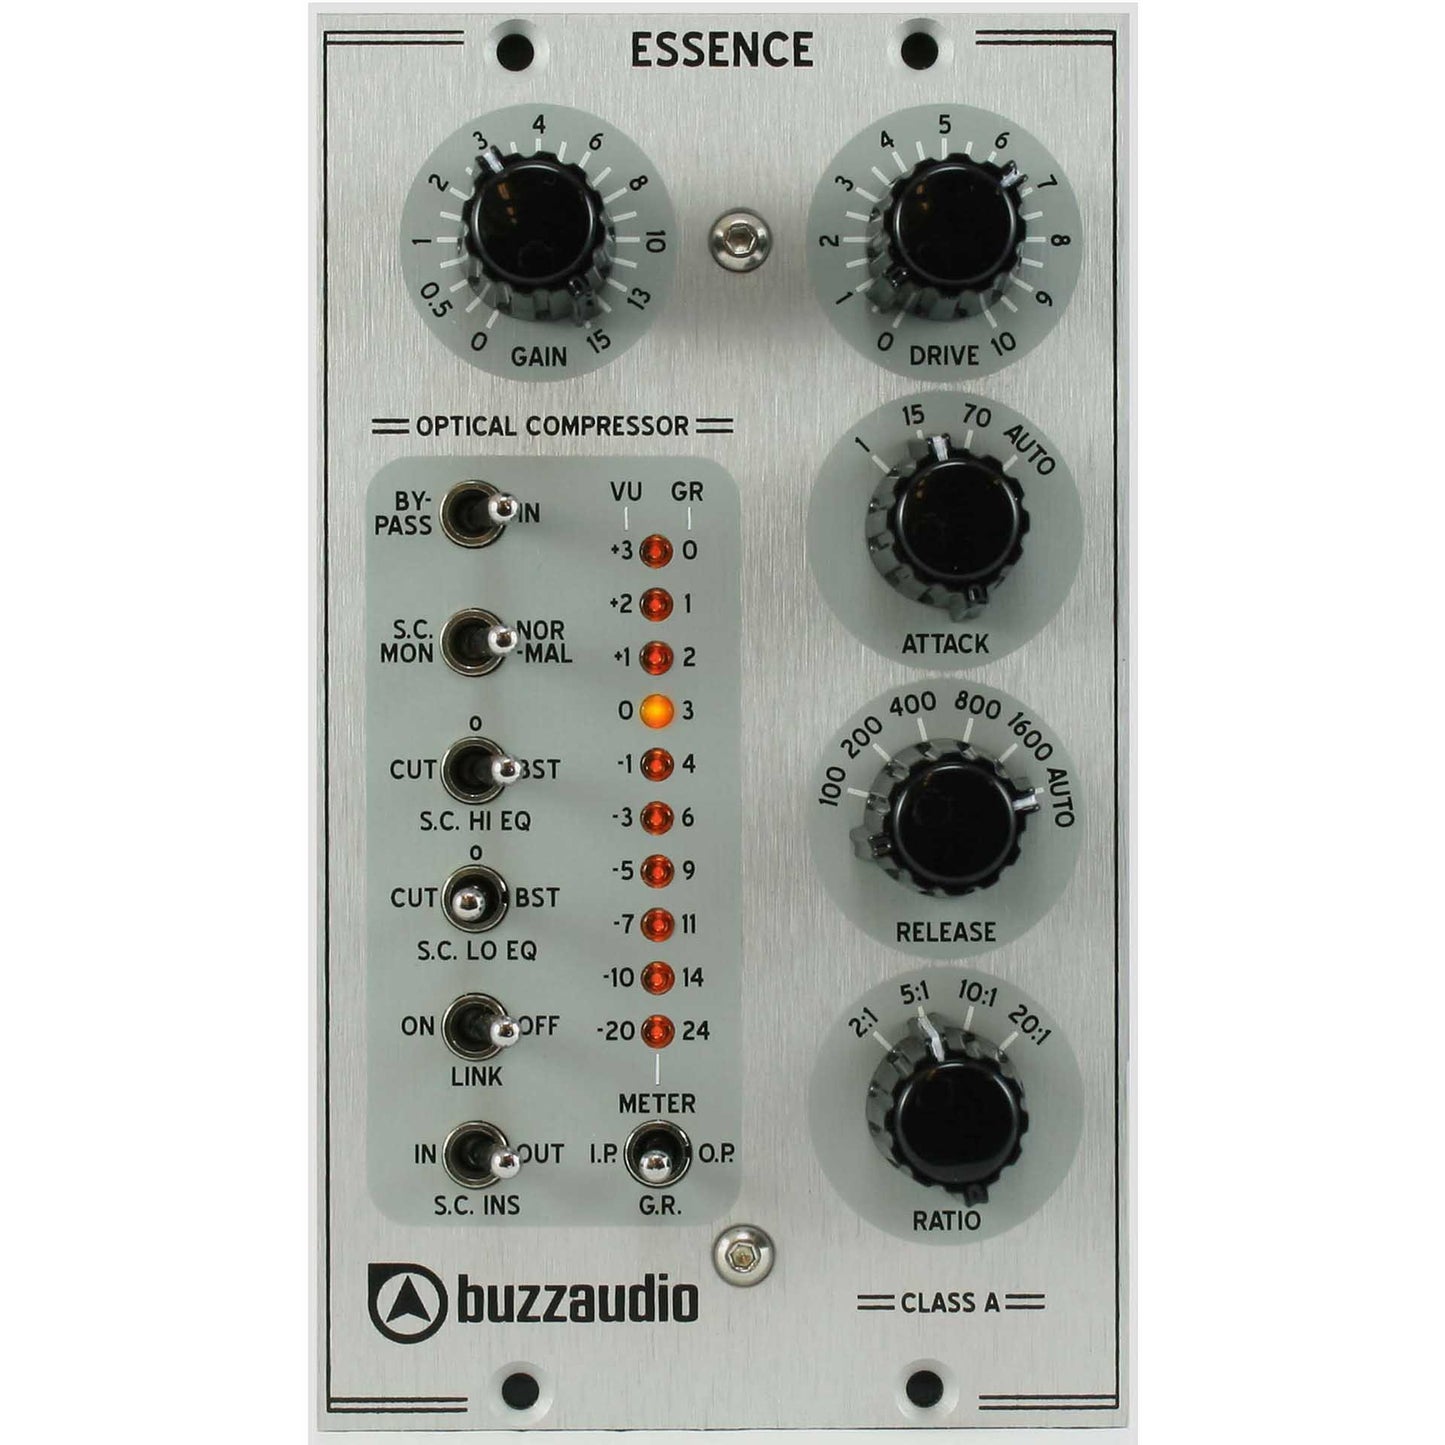 Buzz Audio Essence 500-Series Compressor